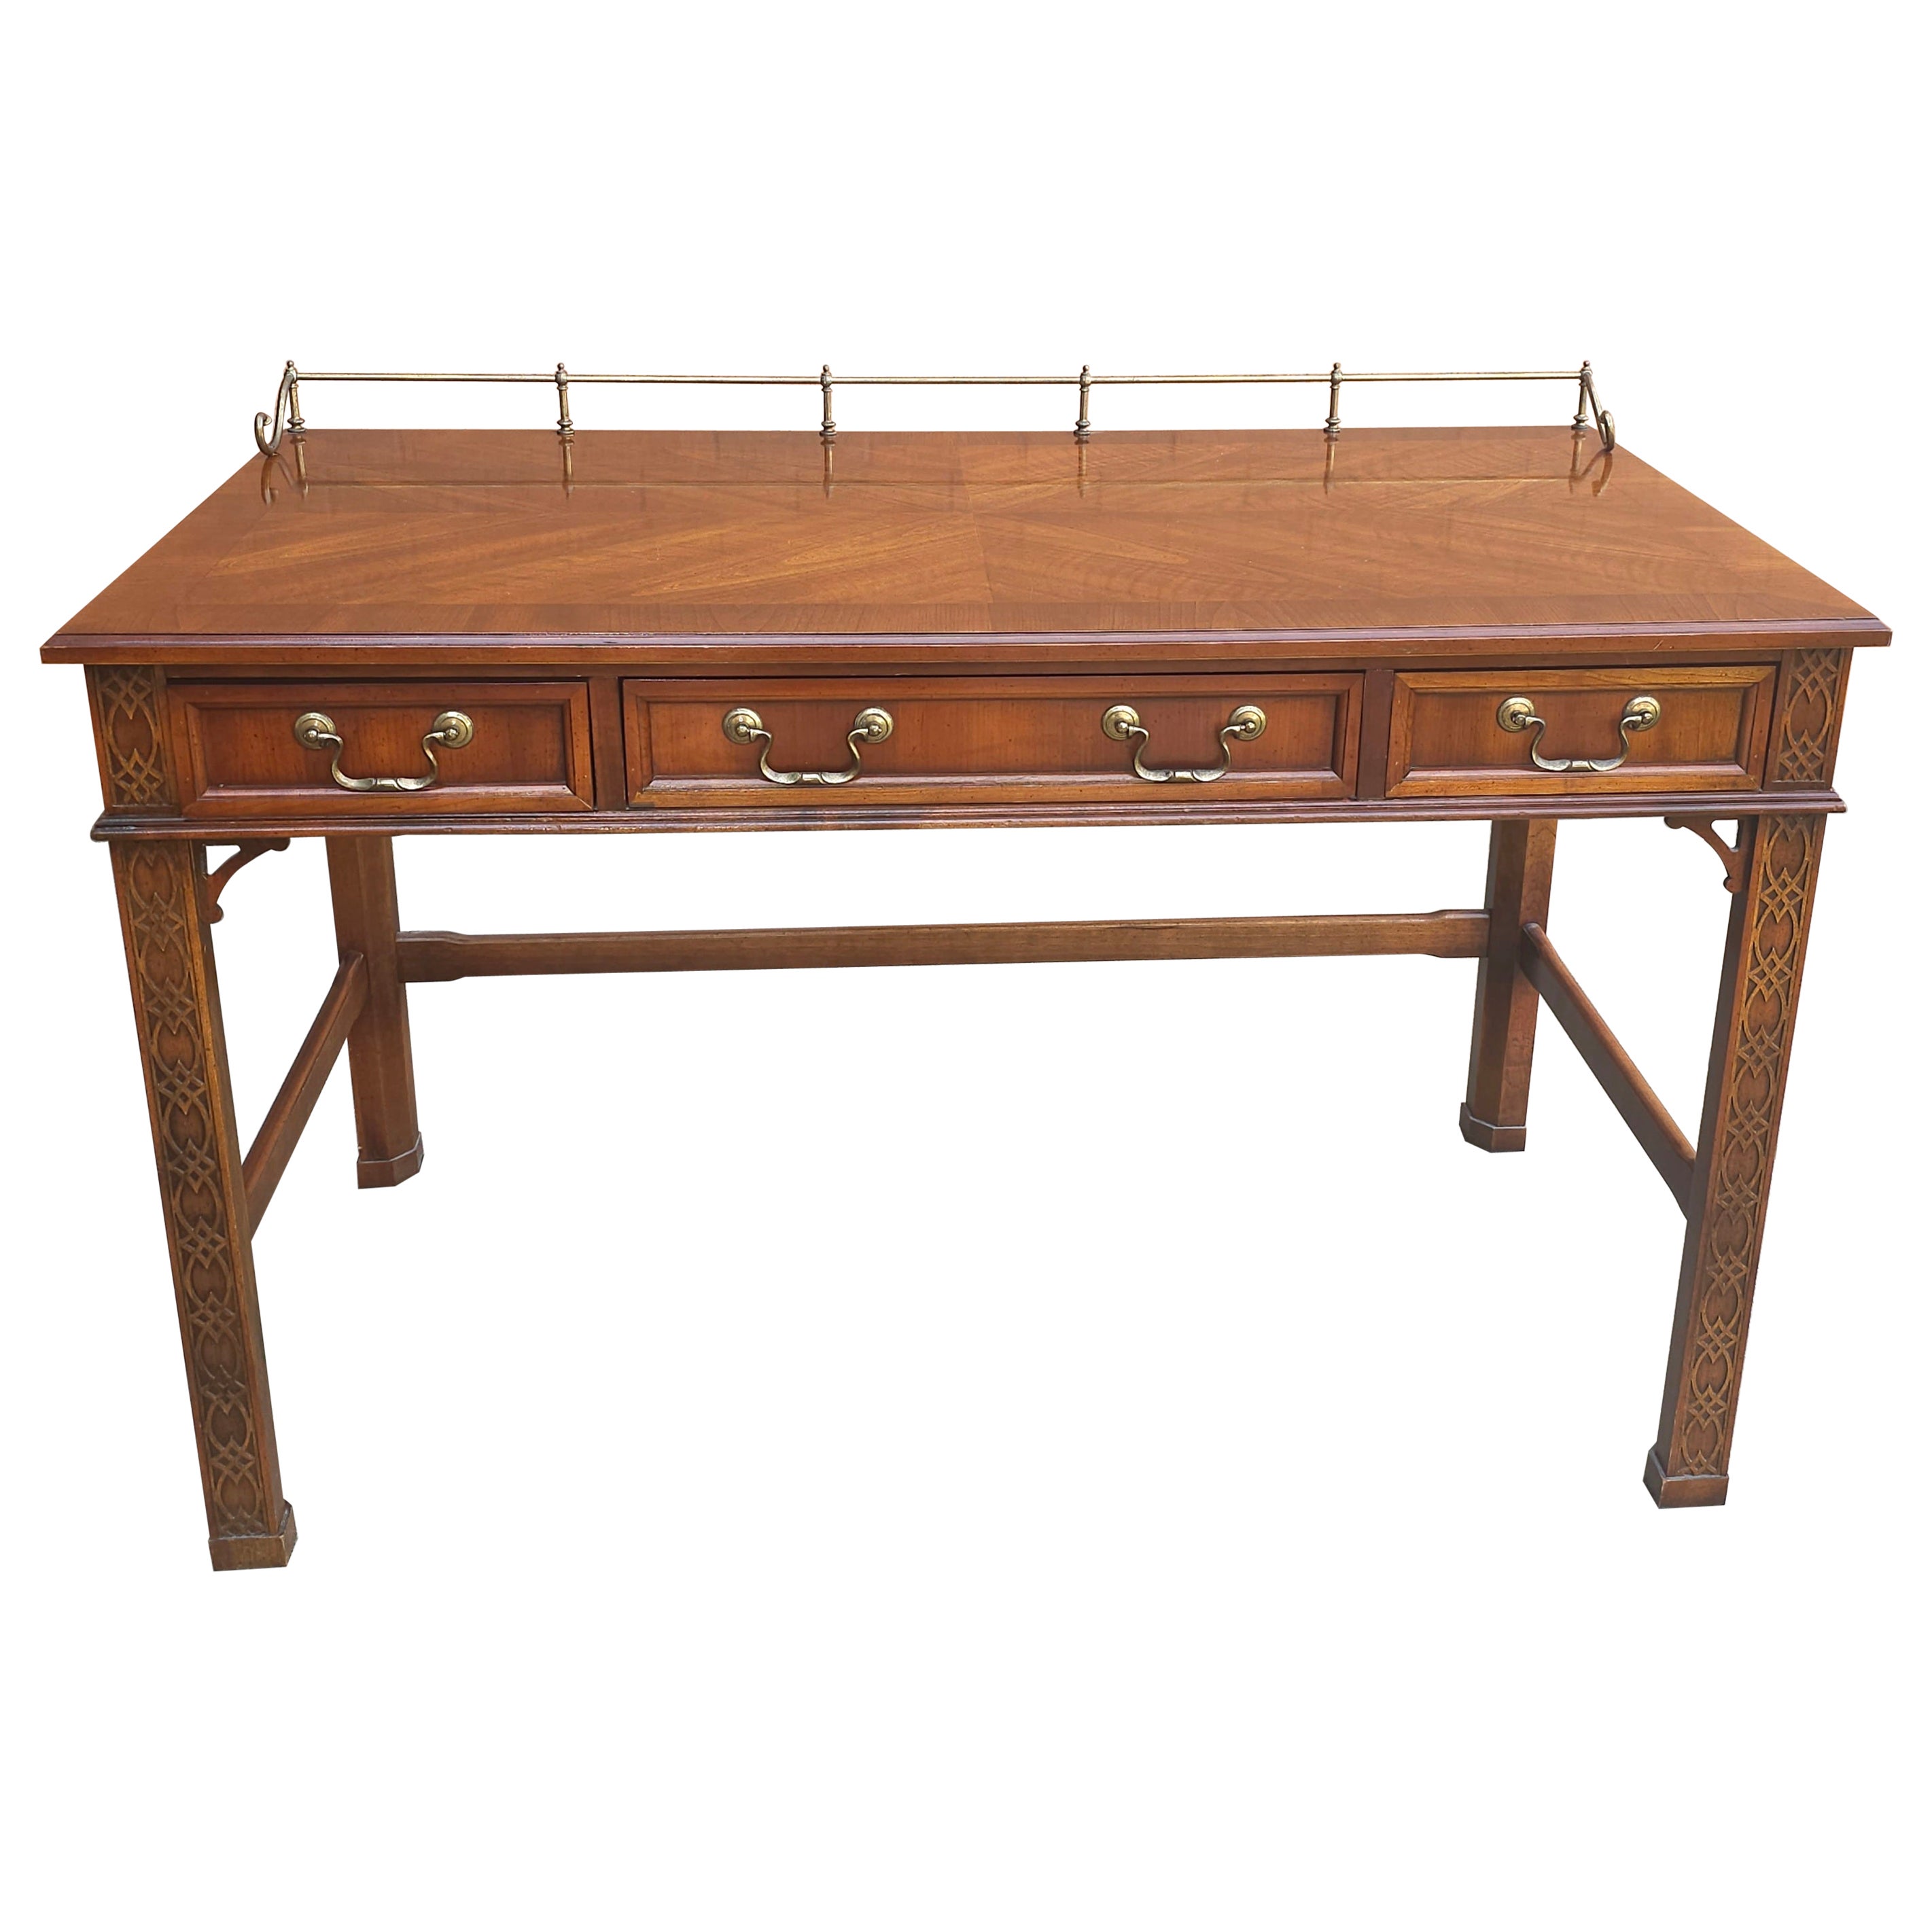 George III Style Blind Fretwork Mahogany Table Desk w/ Gallery